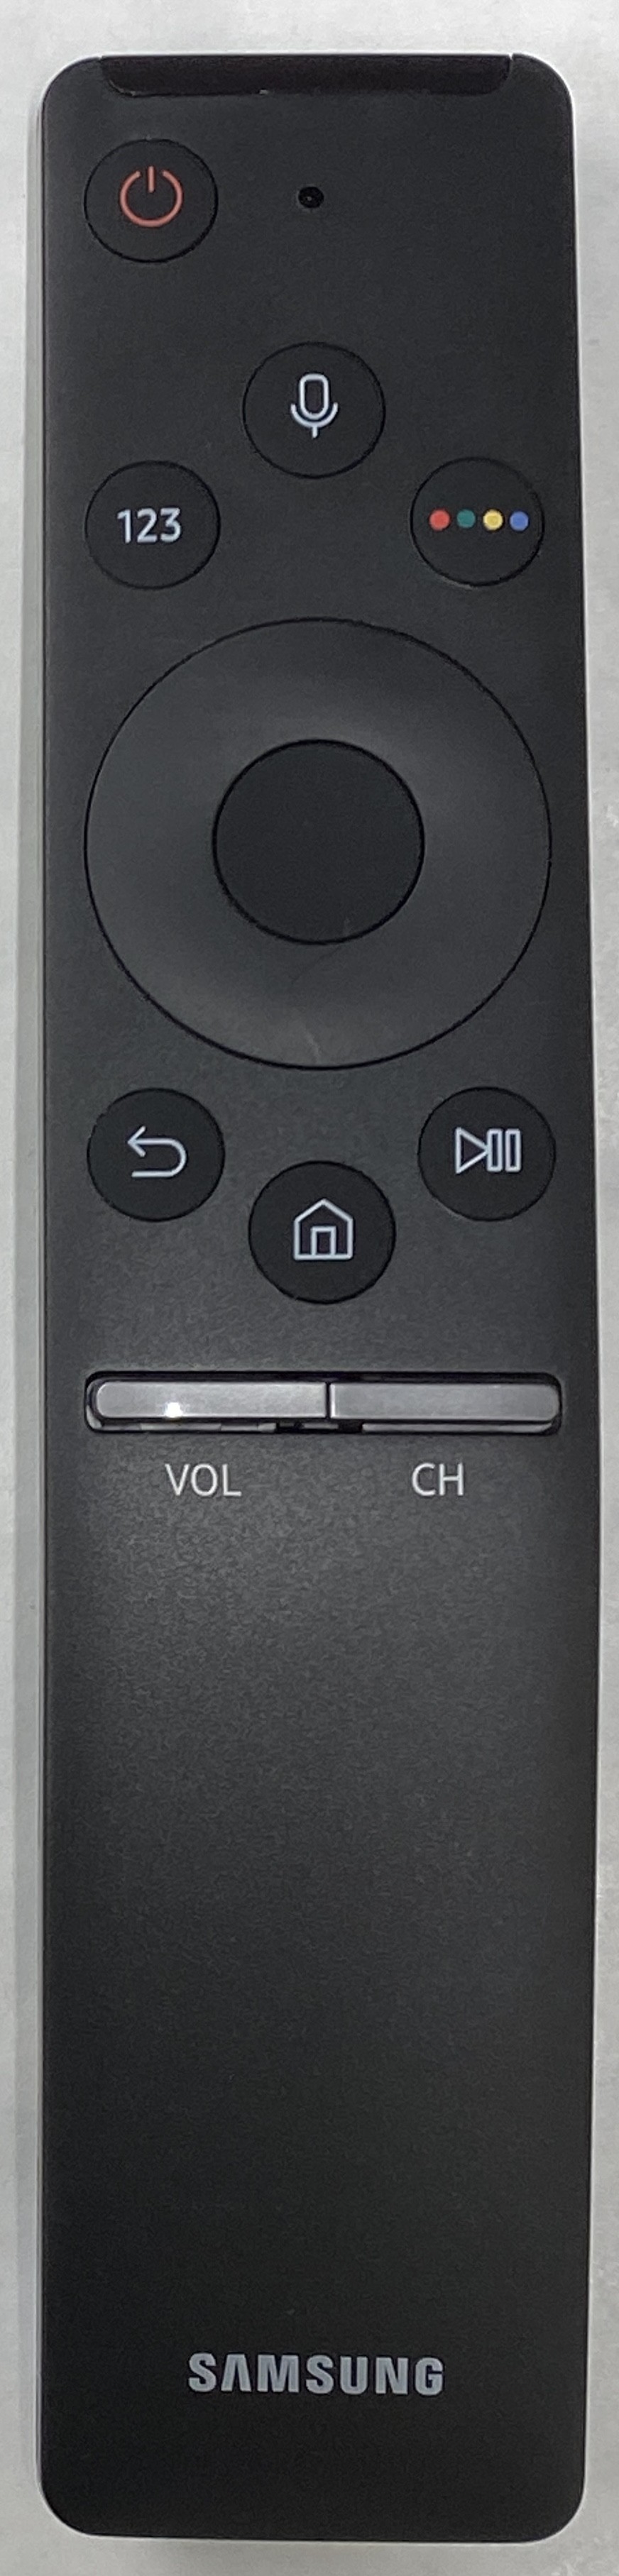 SAMSUNG UE55KU6670 Smart Remote Control Original